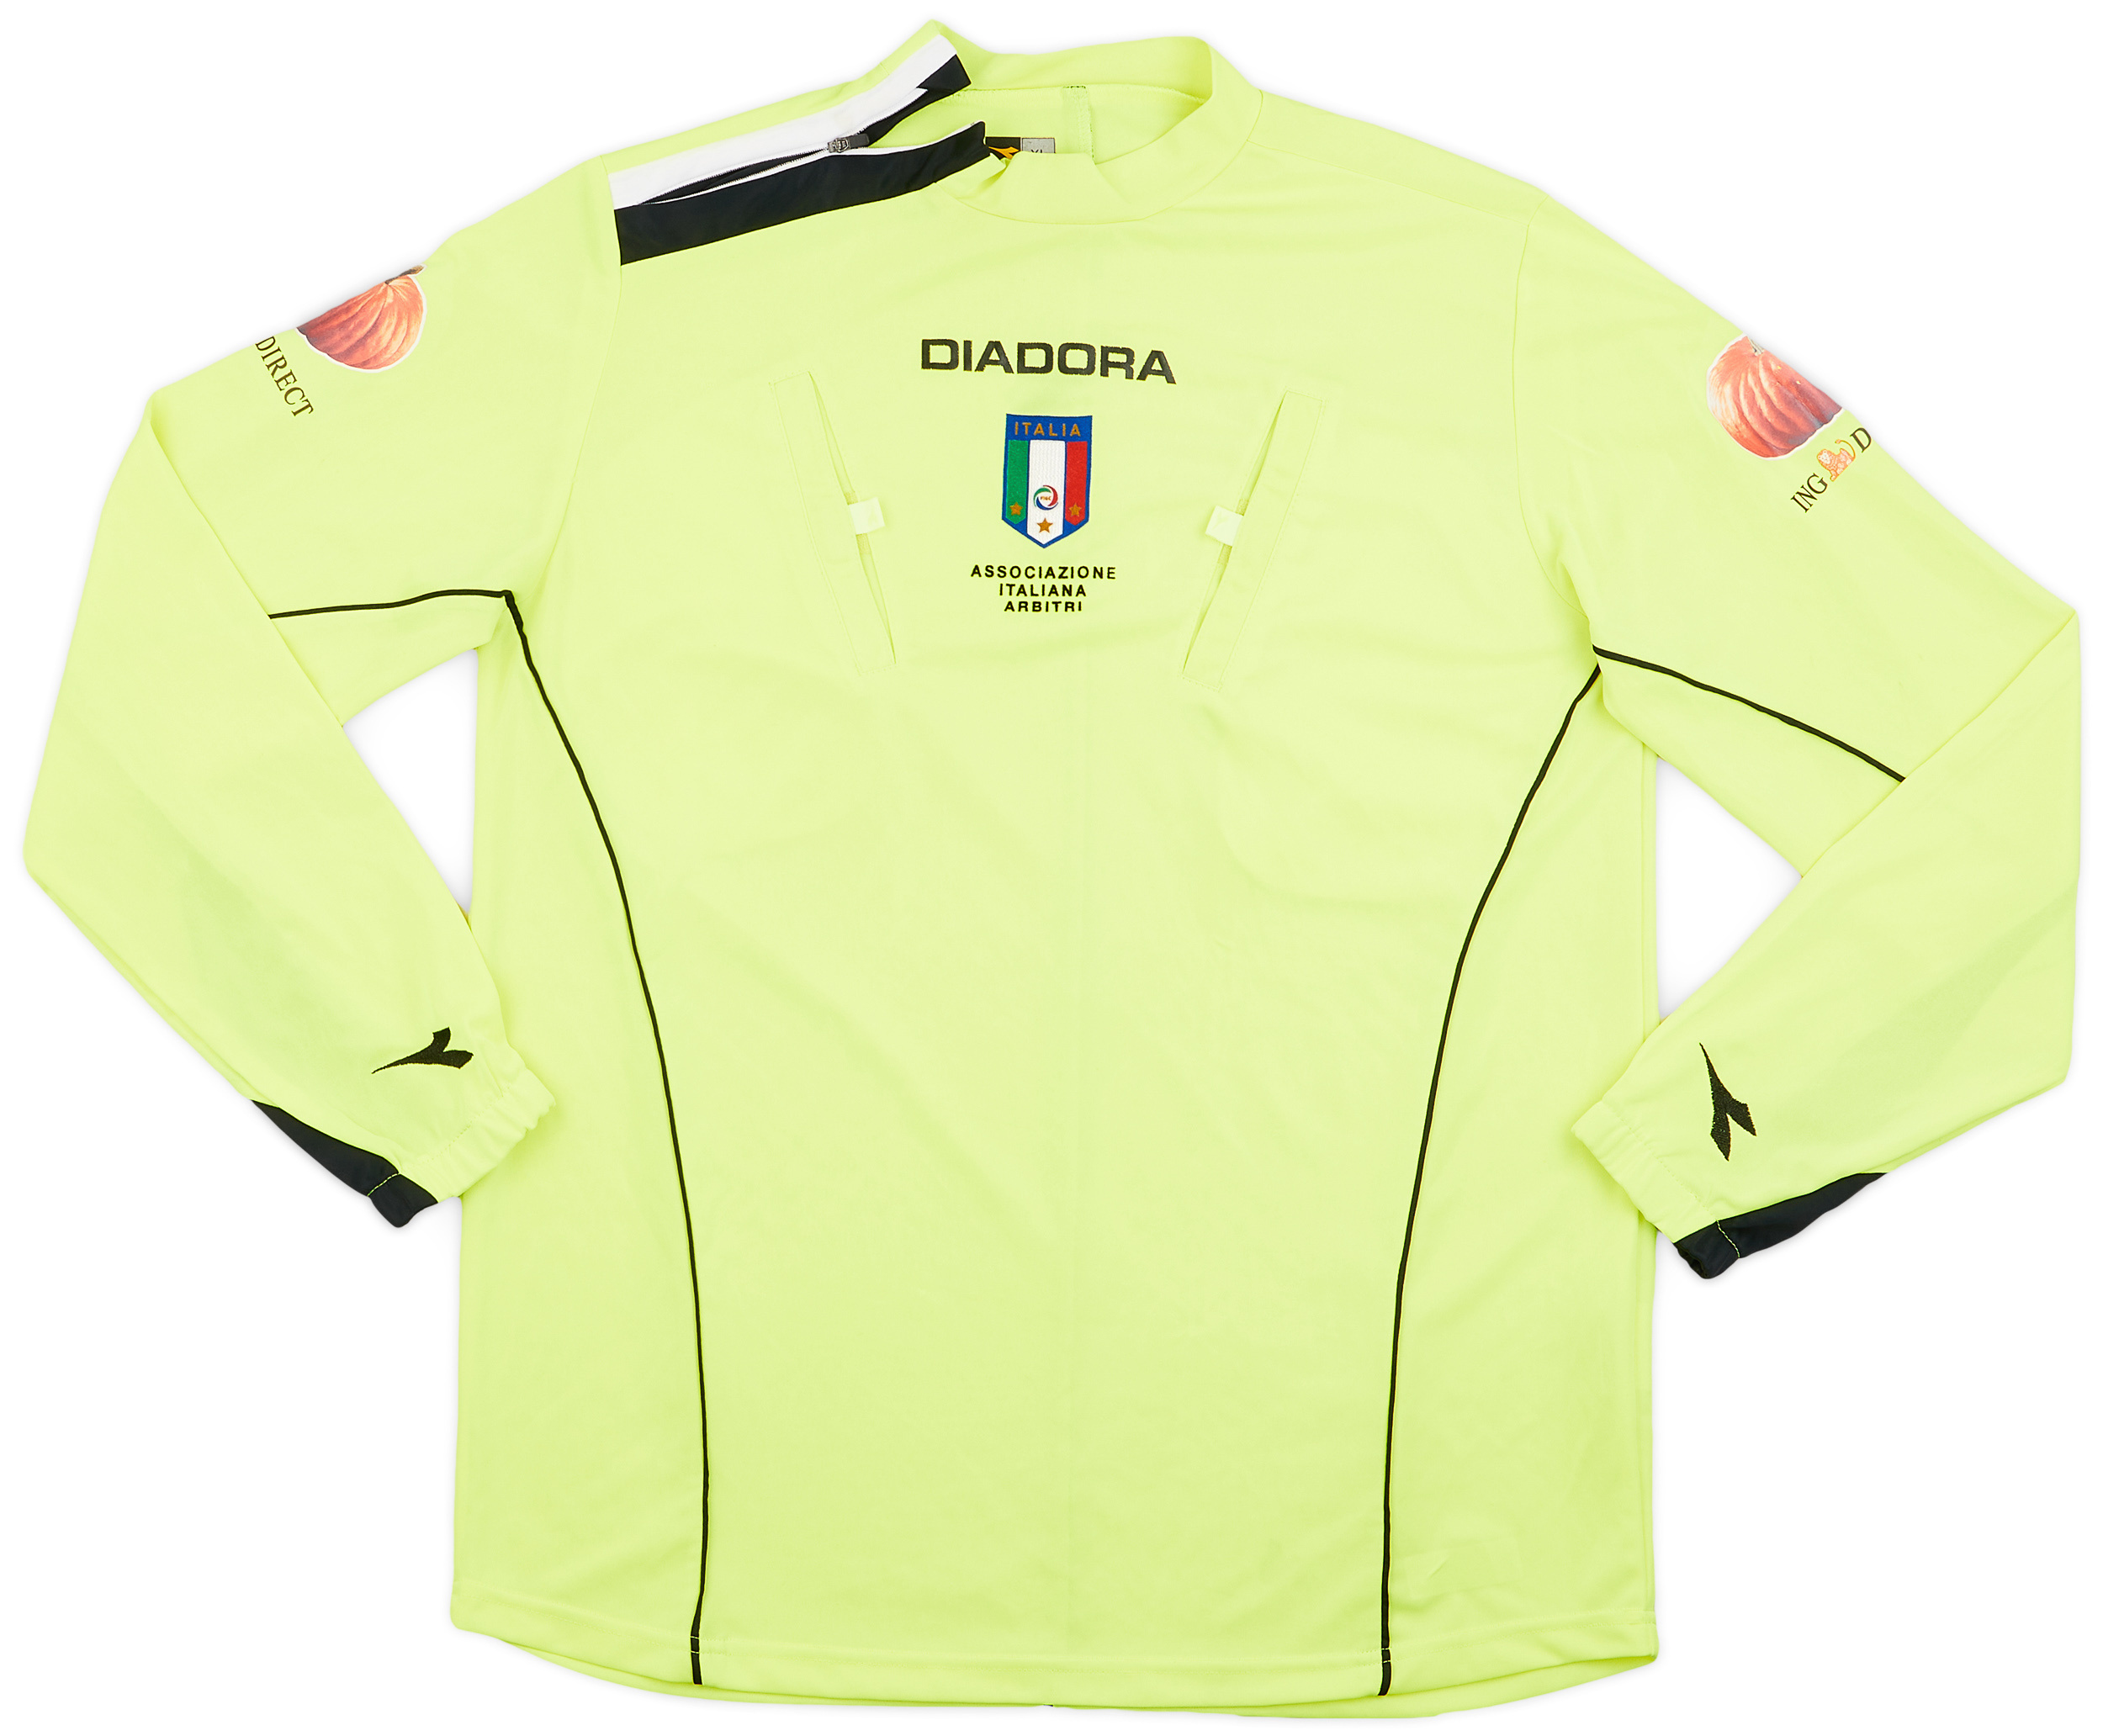 2005-06 Italy Diadora Referee Shirt - 5/10 - ()